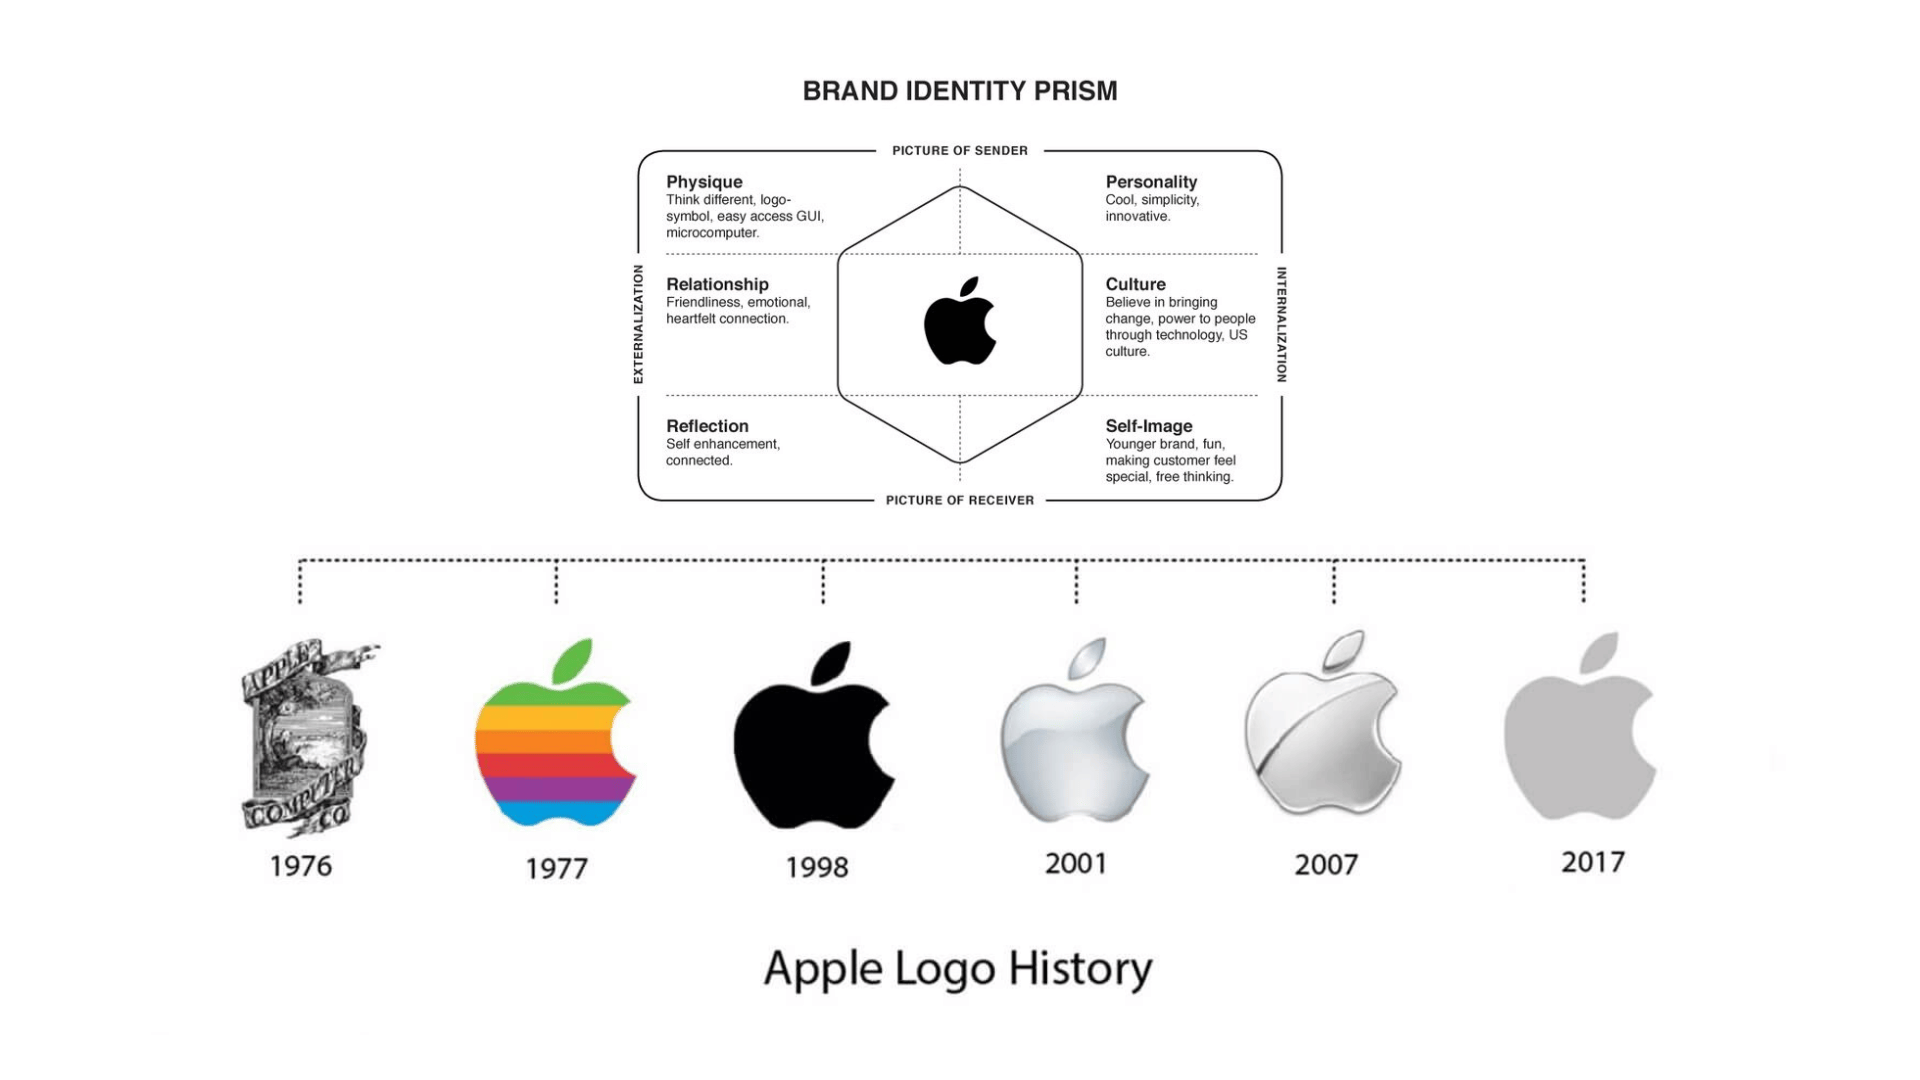 Apple Brand Identity Prism and Logo History